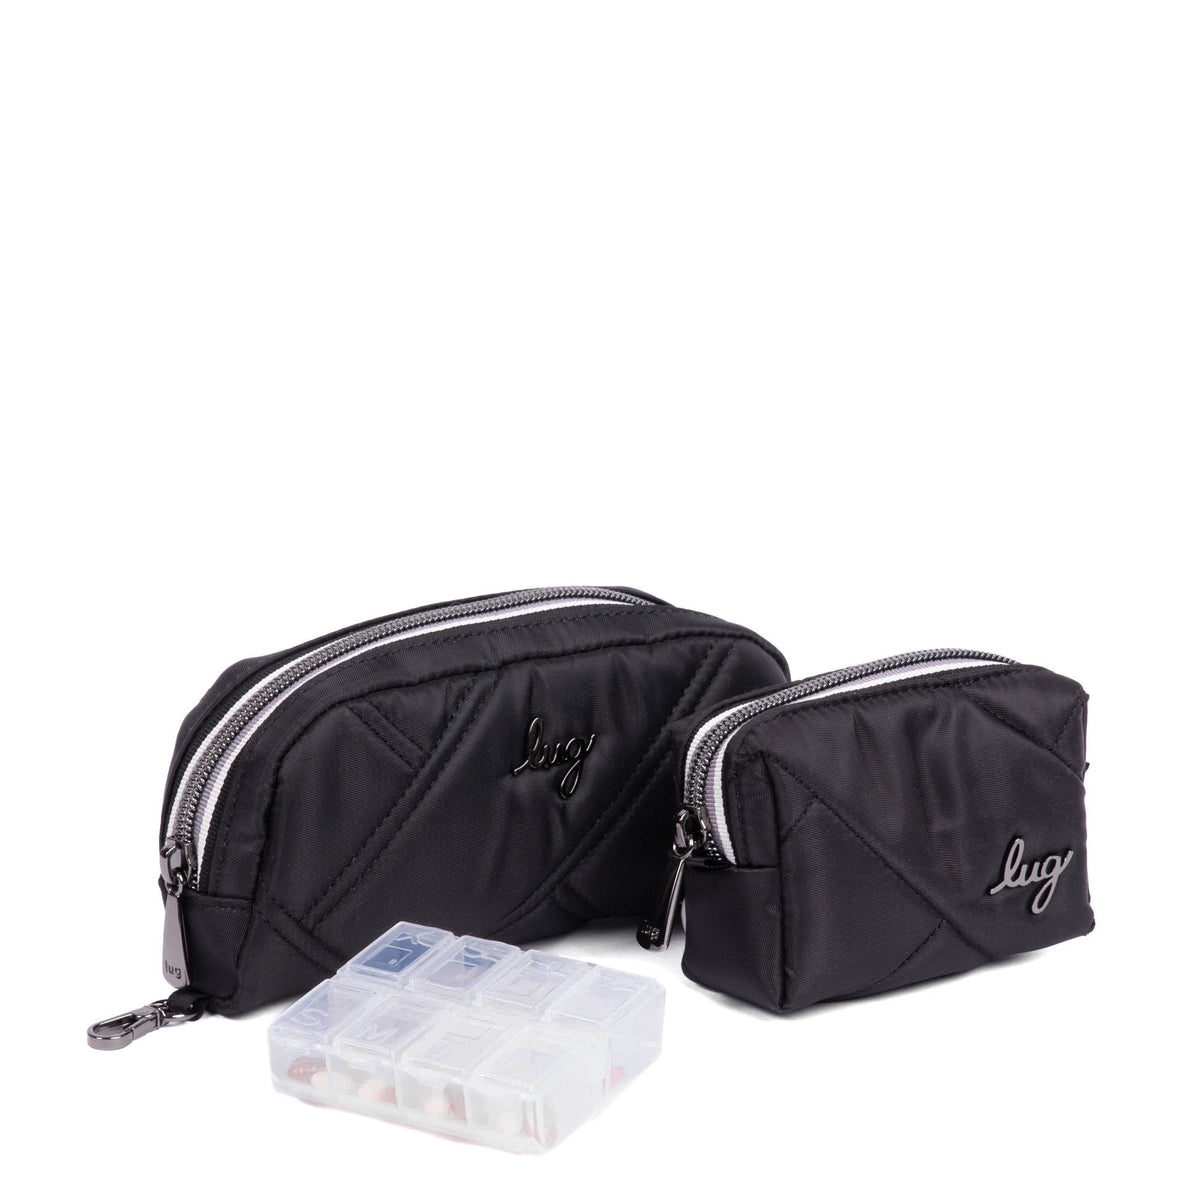 Bobsled XL Eyeglass Case &amp; Choo Choo Mini Pill Box Set